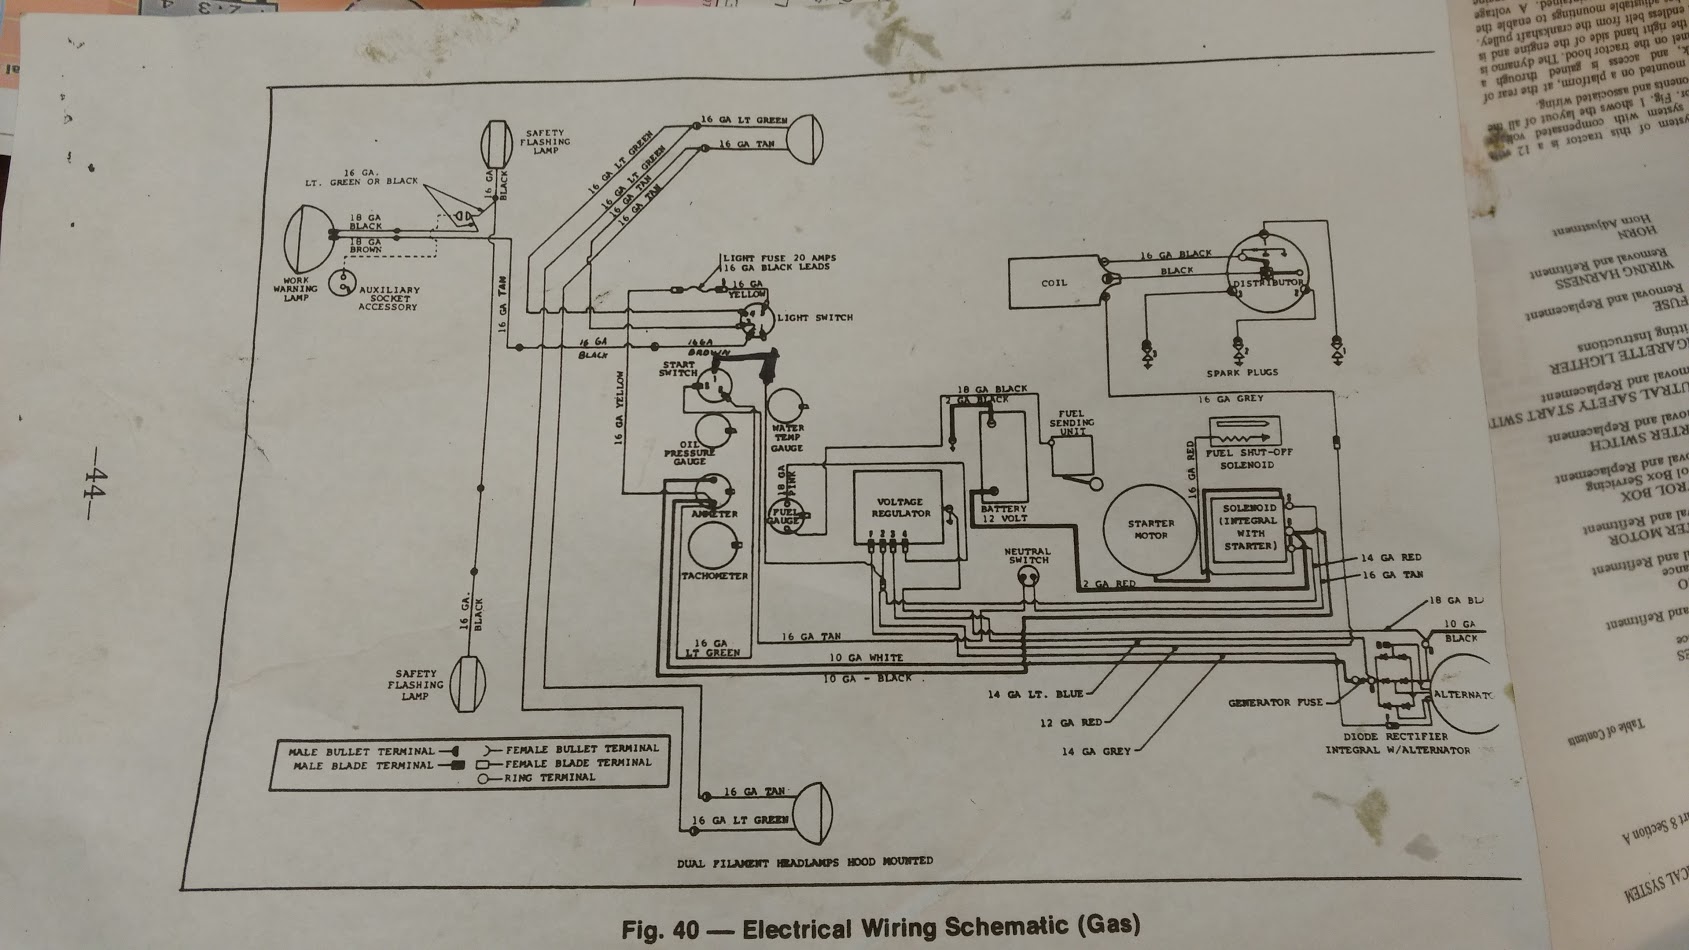 Massey Ferguson 165 Voltage Regulator Wiring Diagram - Wiring Diagram